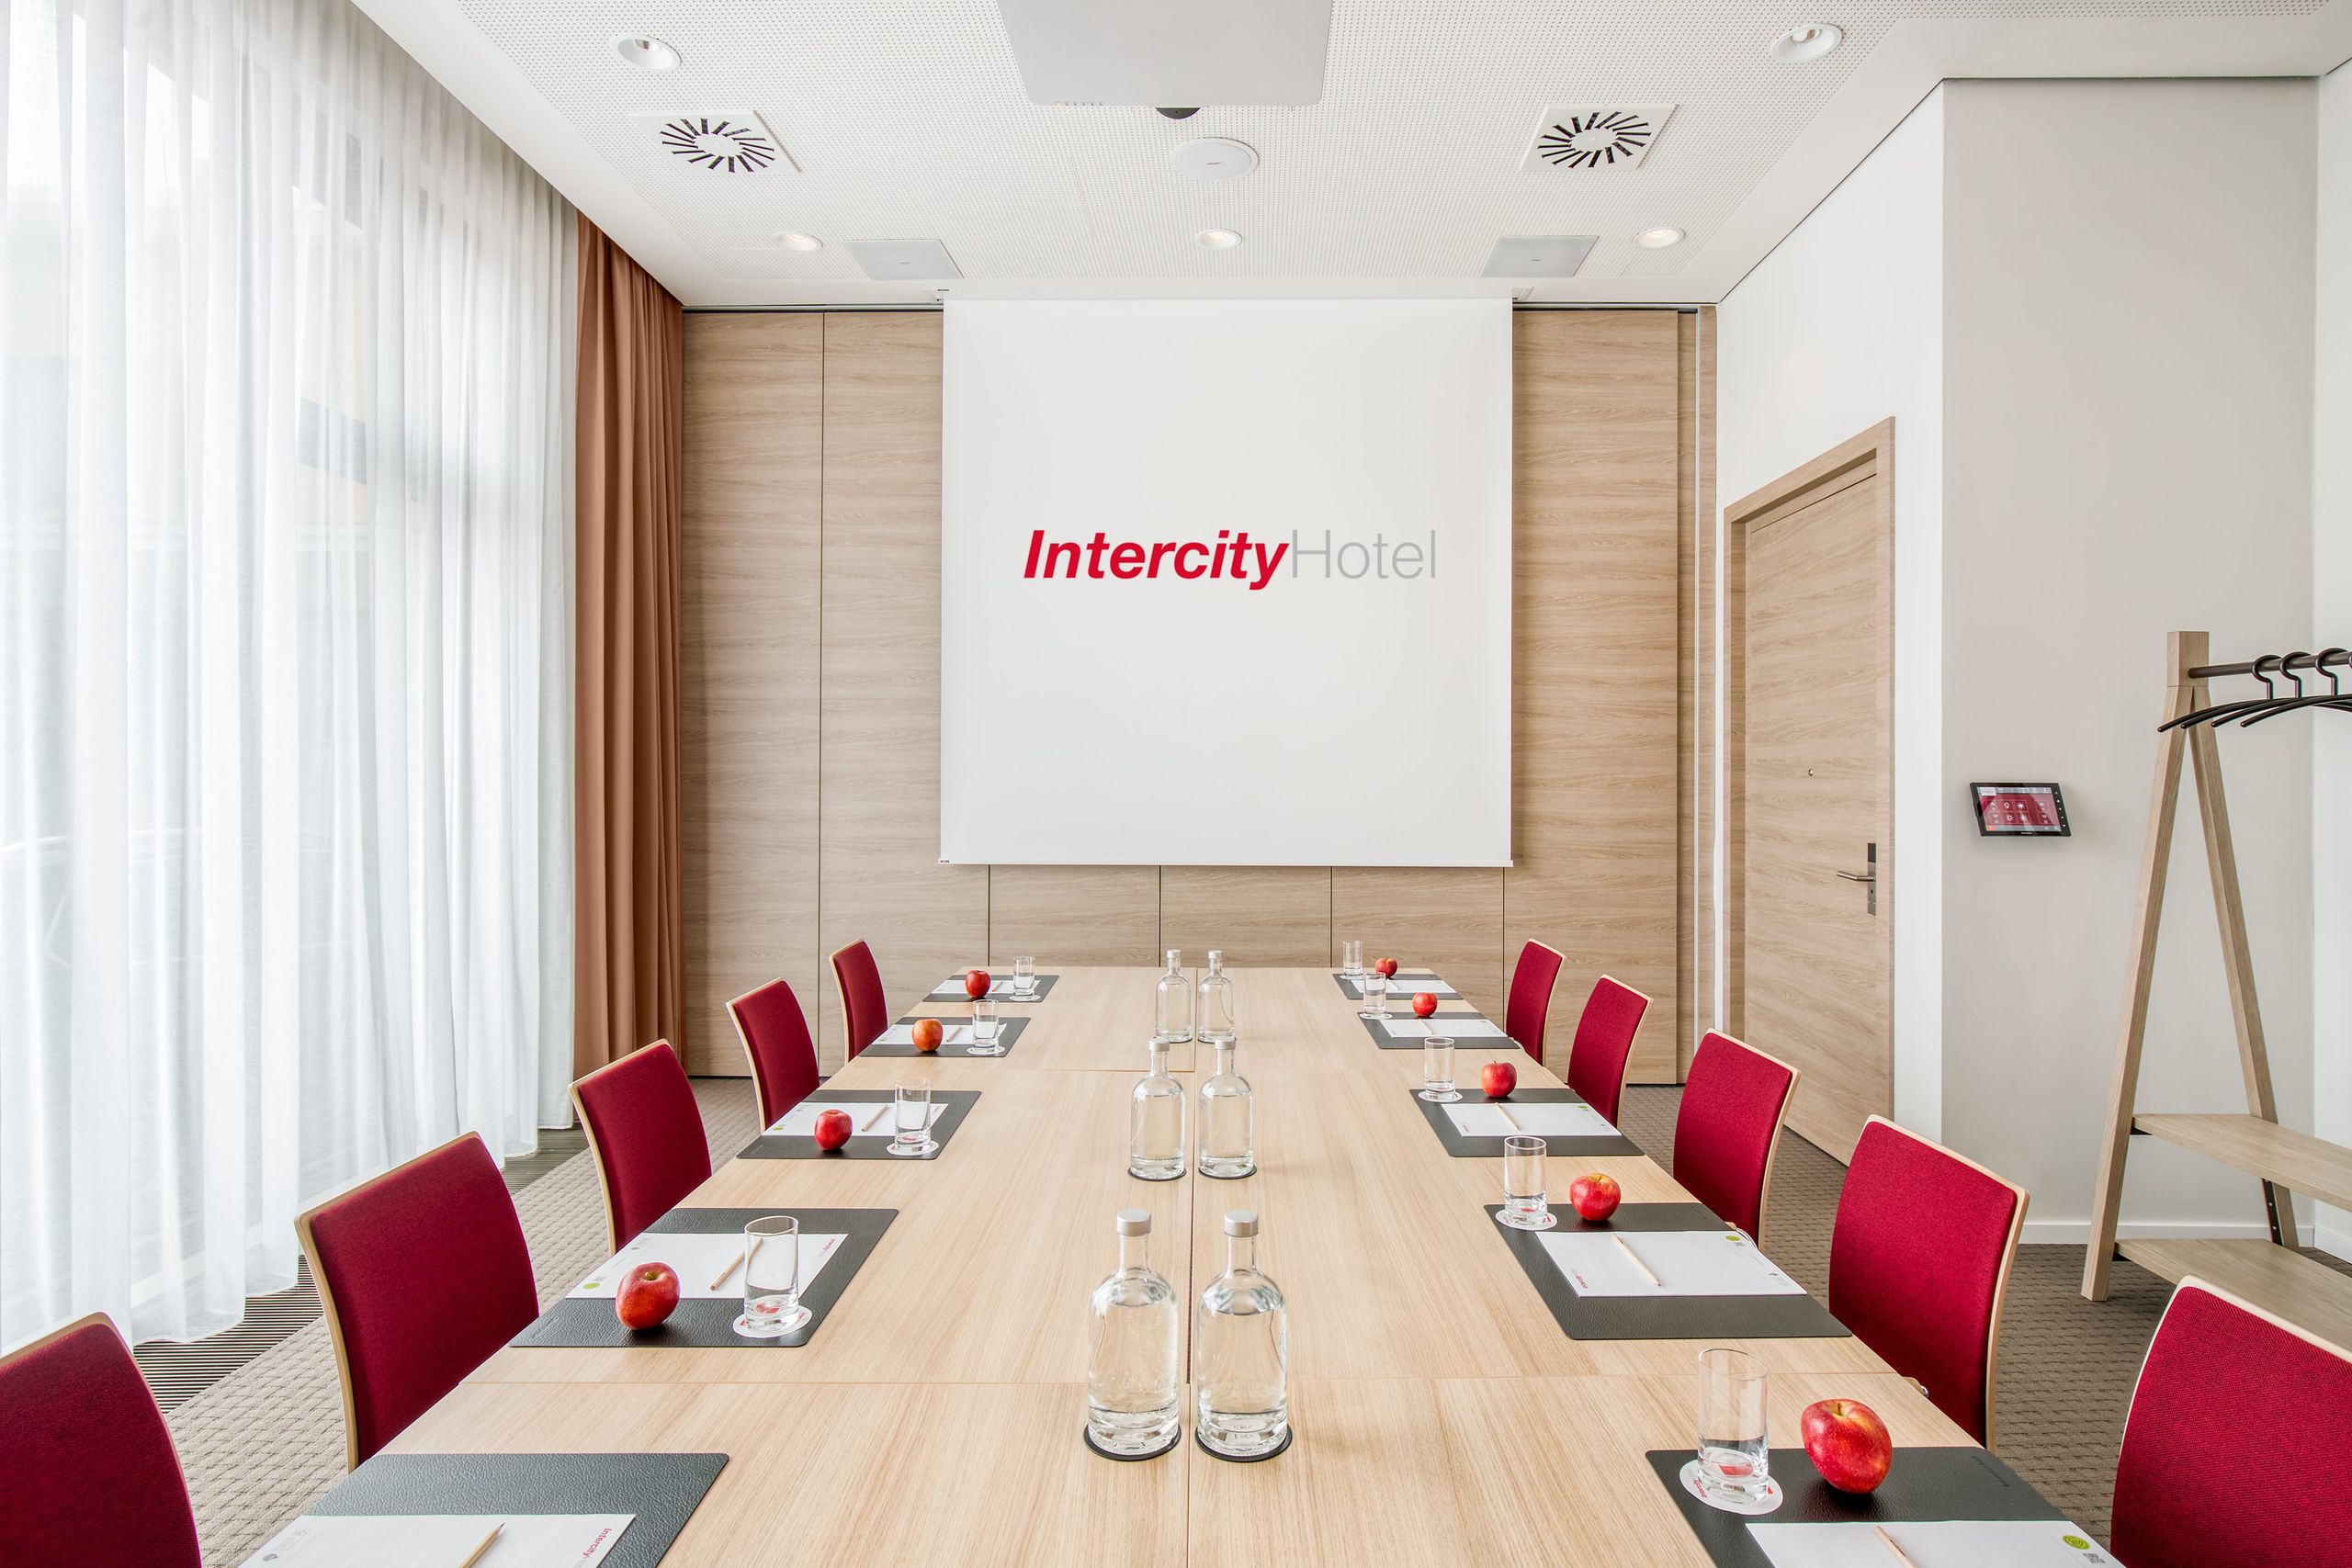 IntercityHotel 希尔德斯海姆 - 会议 - 奖励措施 - 会议室 - 活动